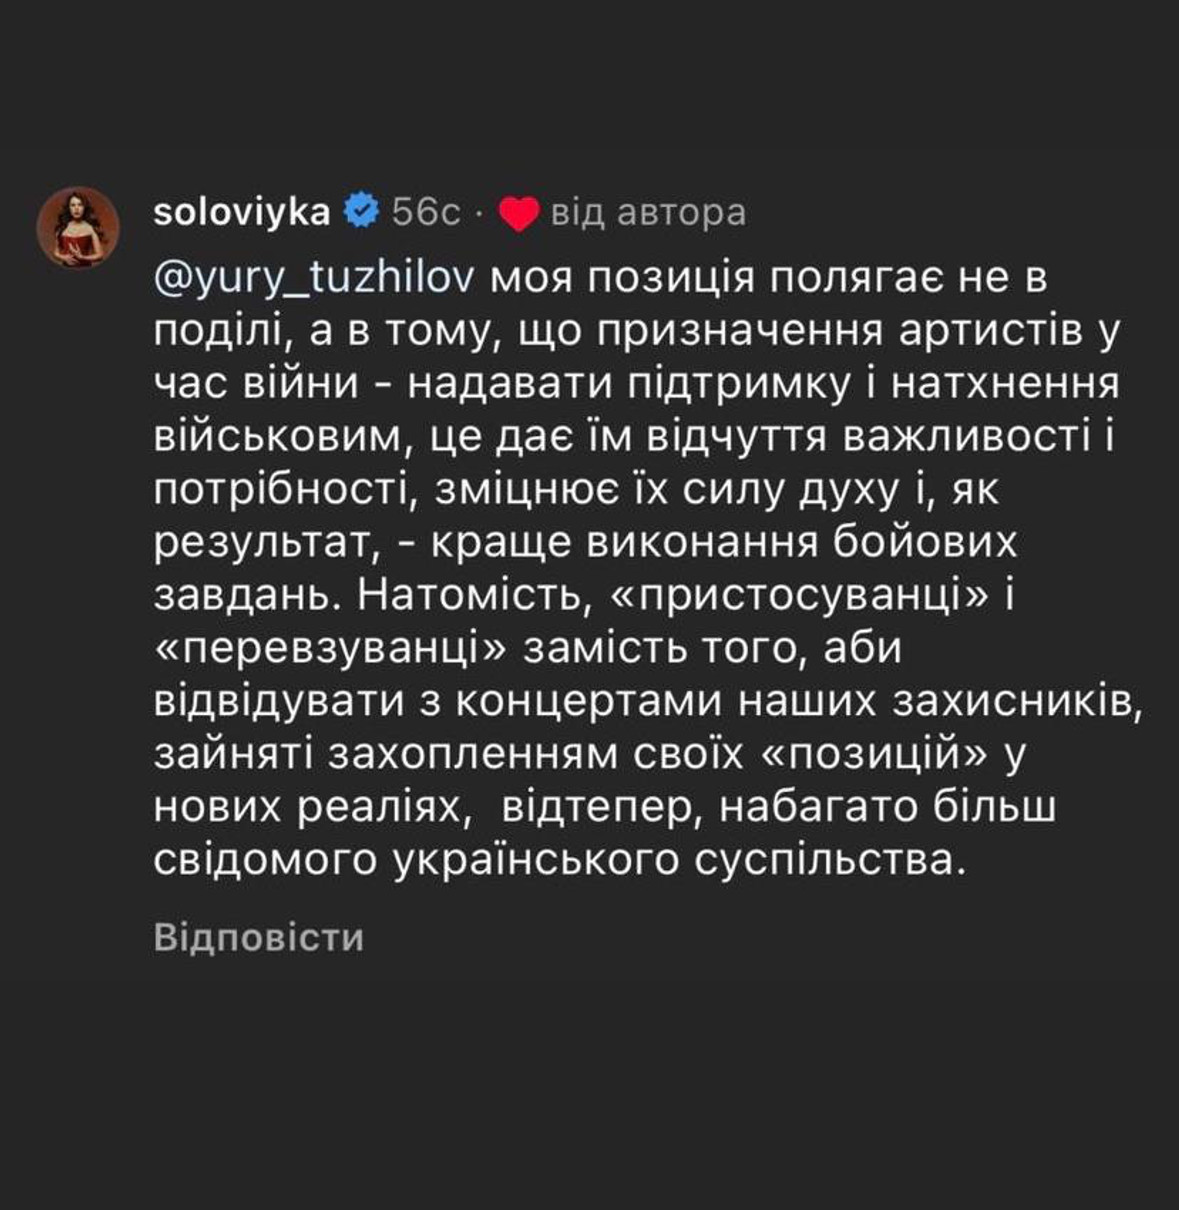 Згодом Соловій в Instagram пояснила свої слова